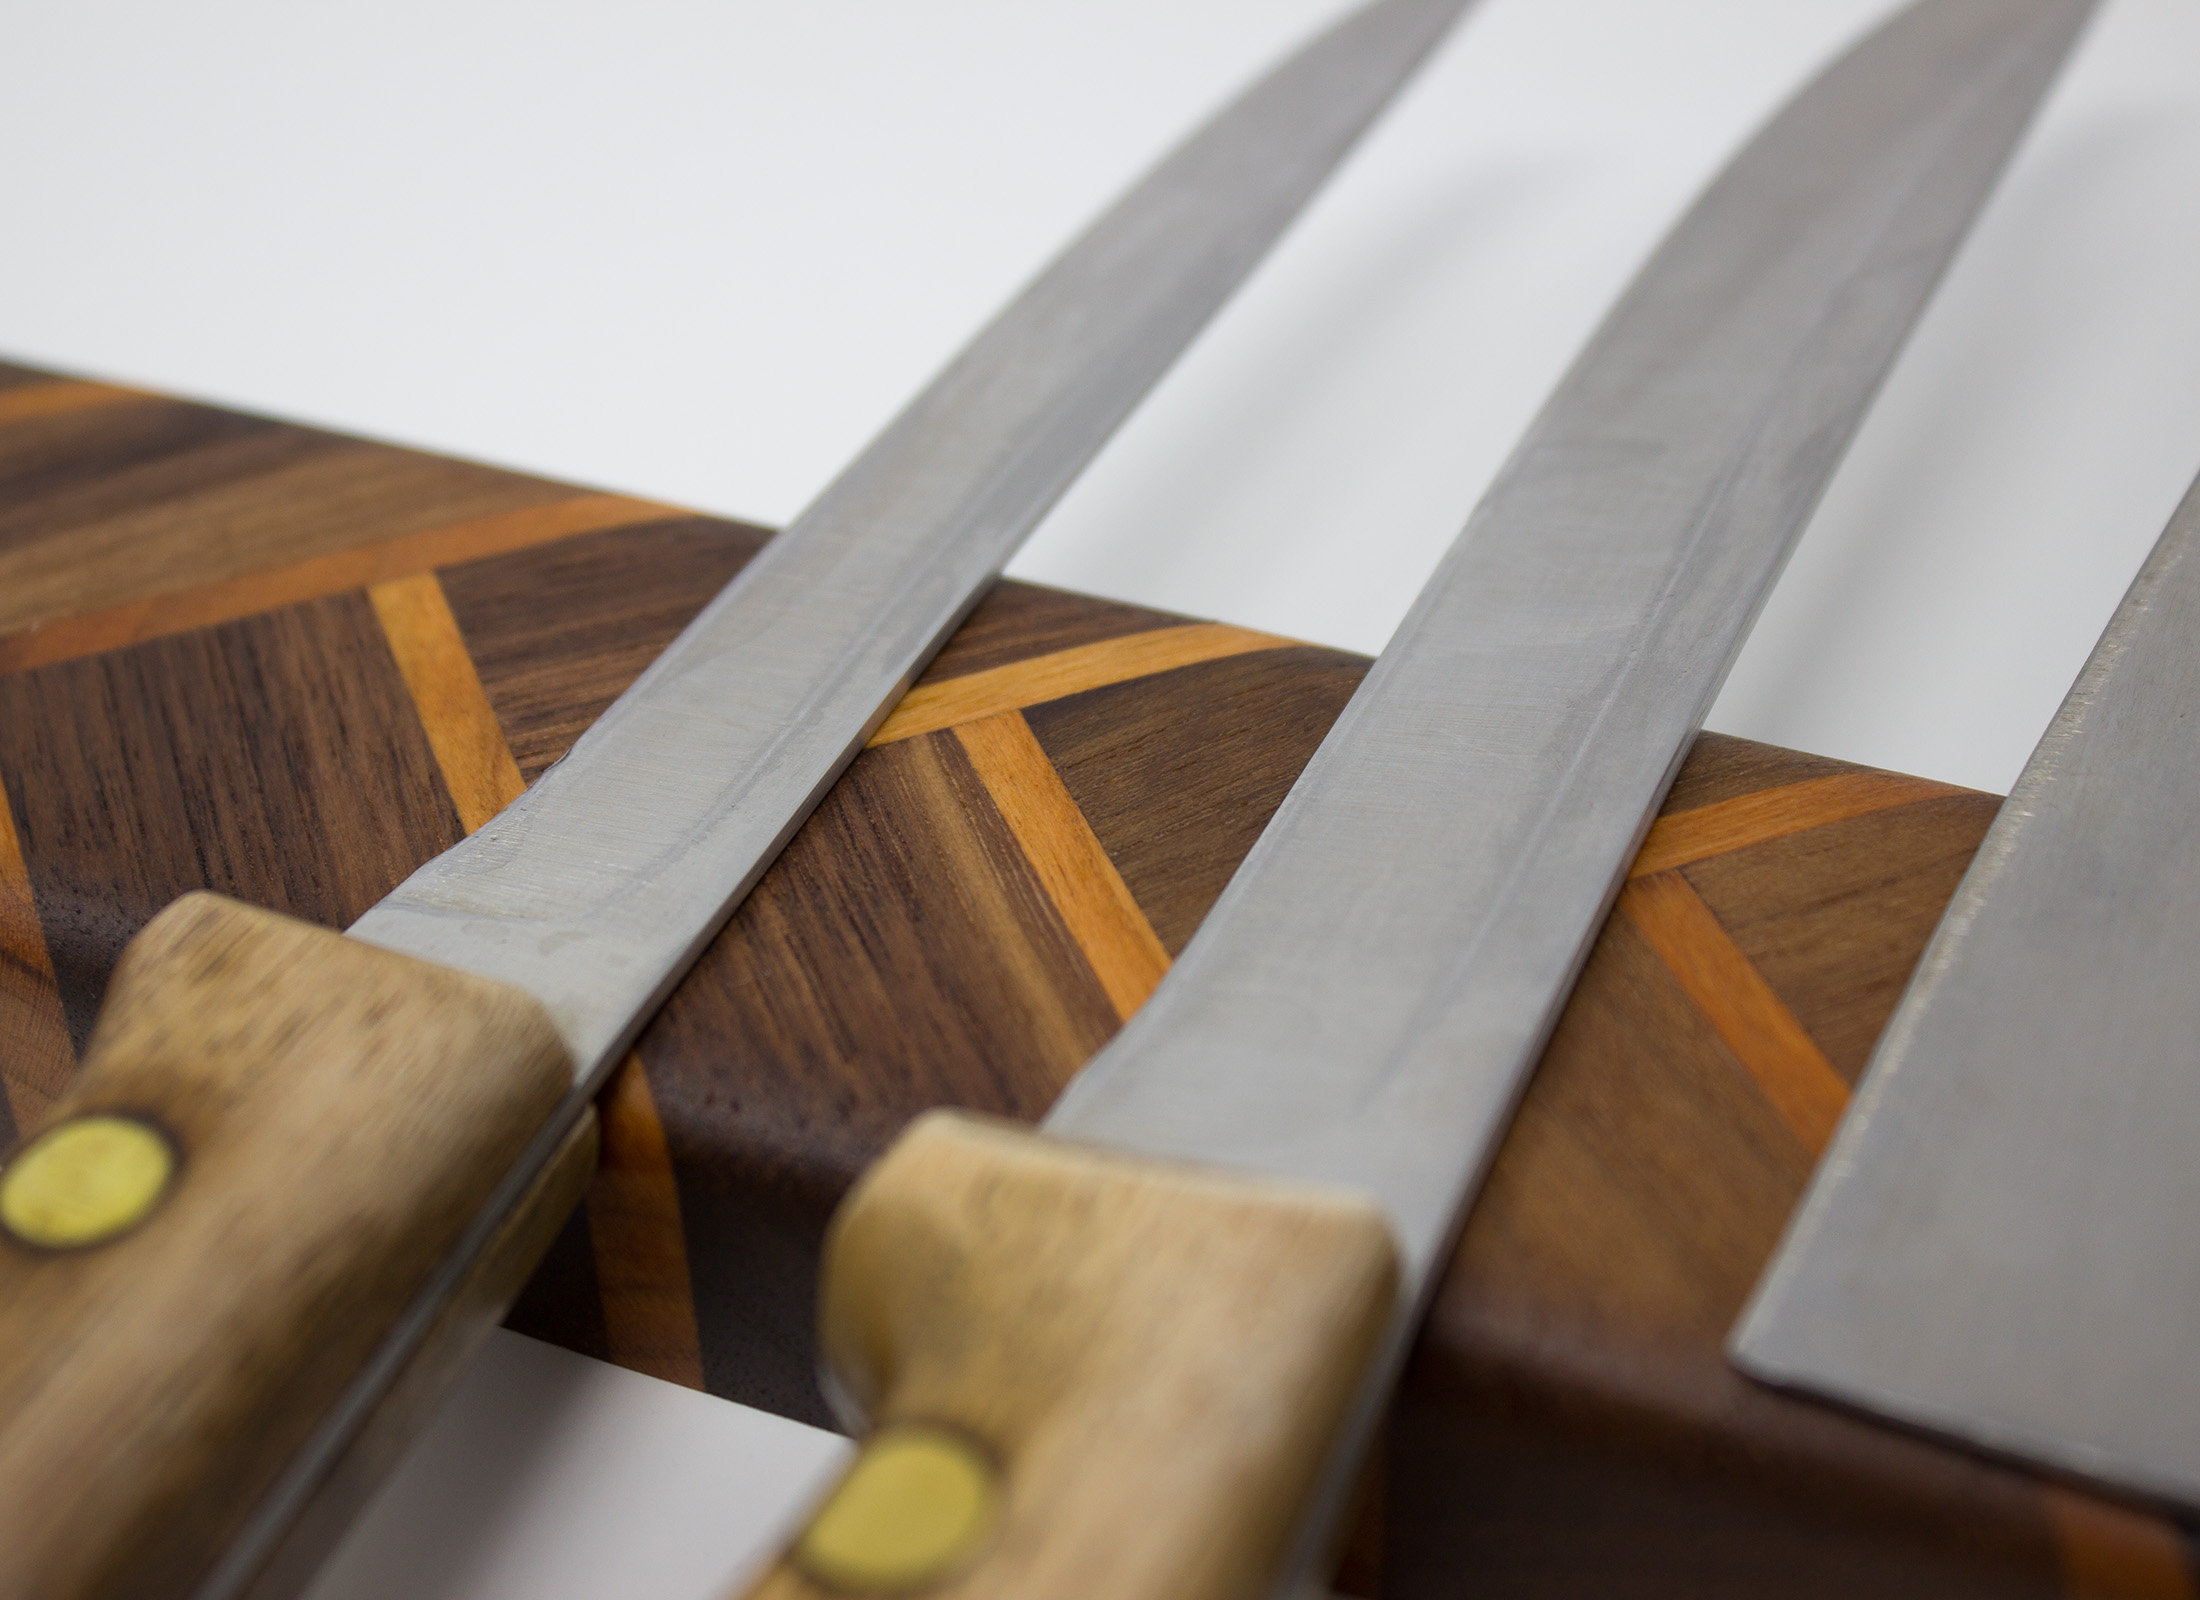 BUY RSCHEF Best Magnetic Knife Holder ON SALE NOW! - Wooden Earth